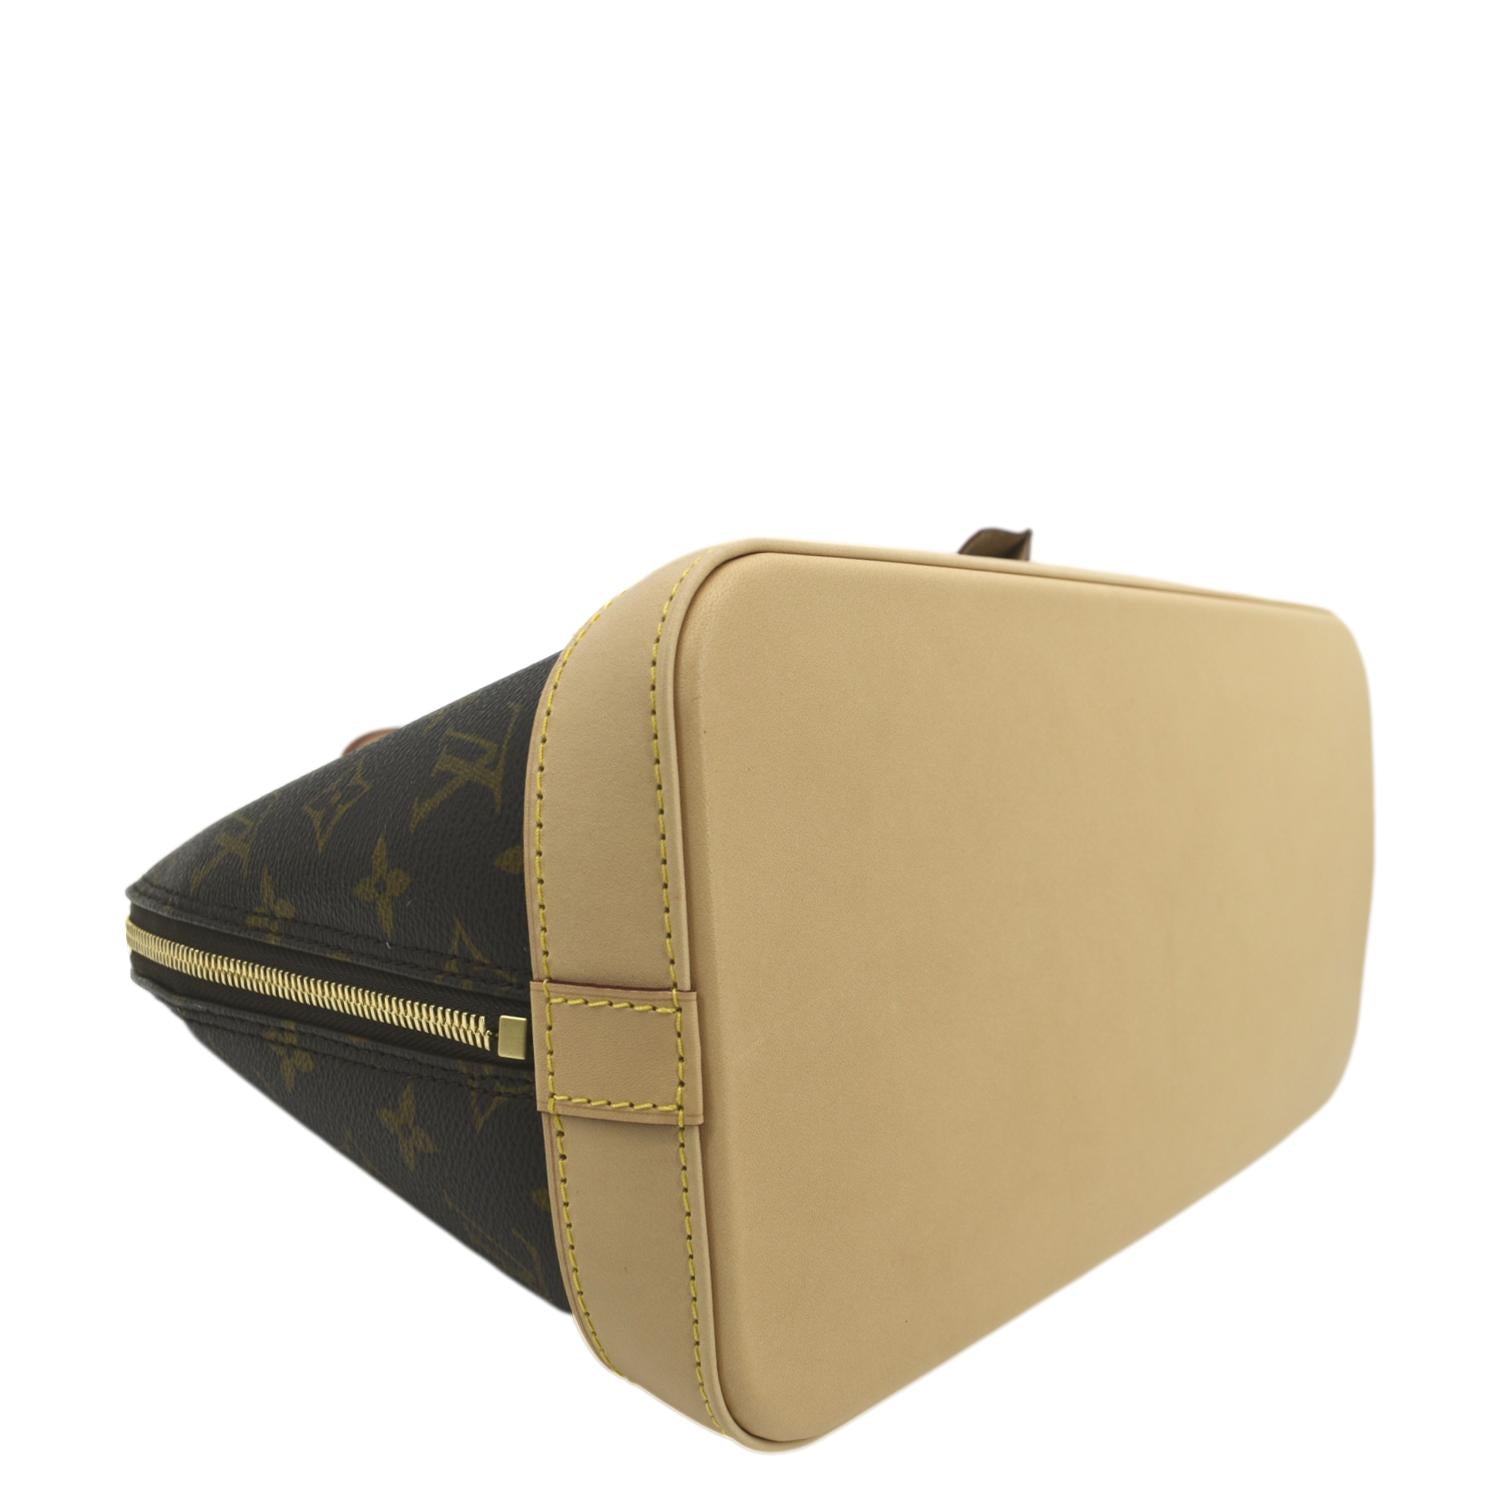 Louis Vuitton Alma Tote Bag